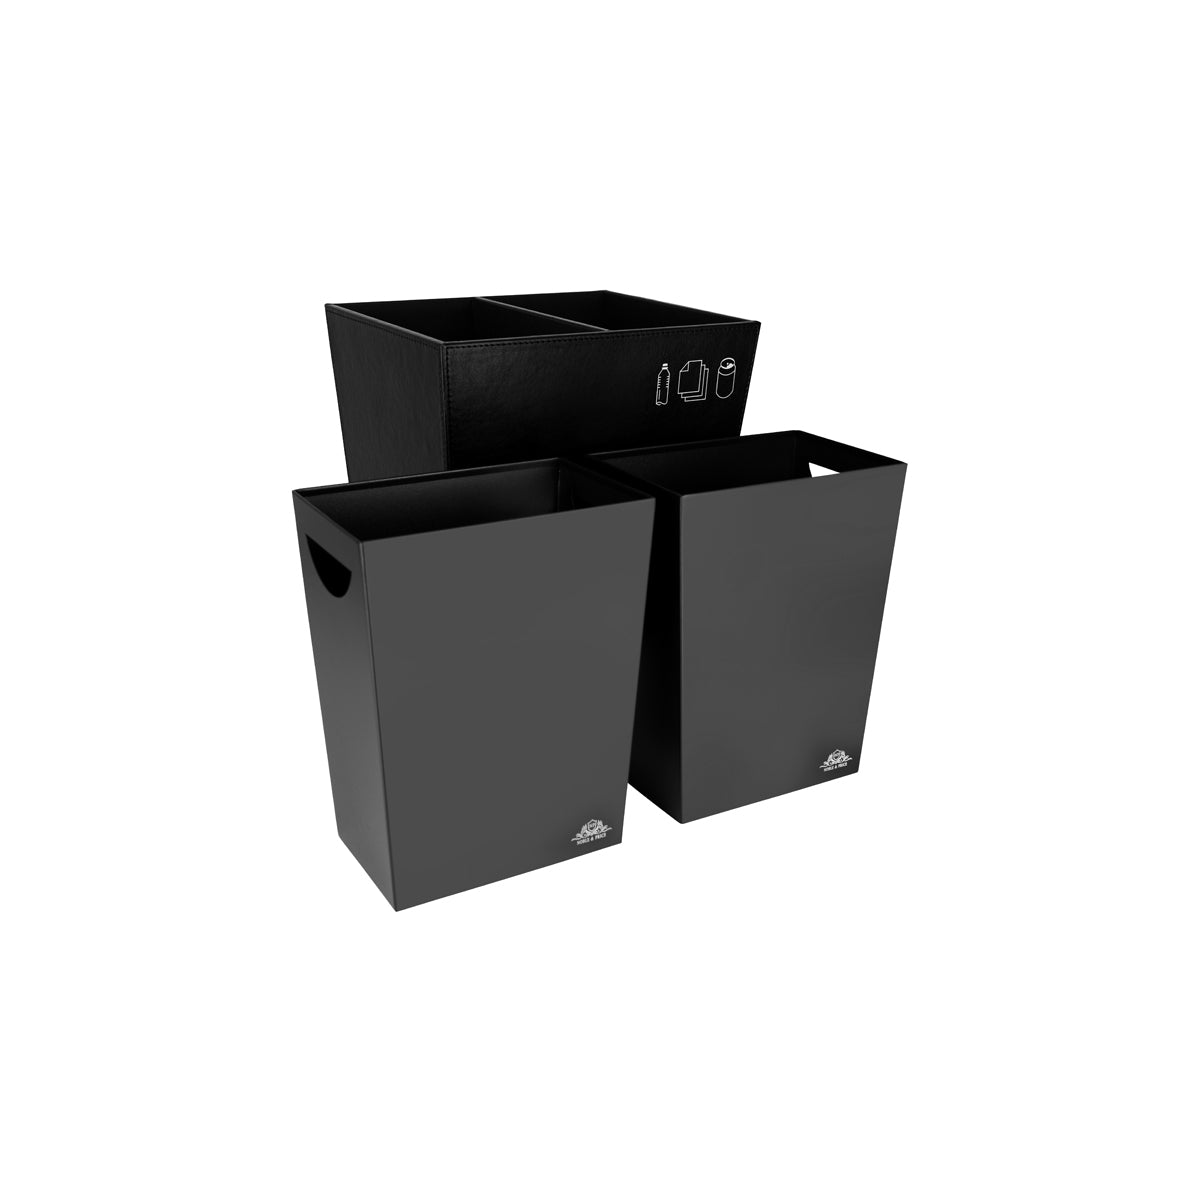 9000-02 Noble & Price Recycle Waste Bin Black 2x3.8Lt Tomkin Australia Hospitality Supplies